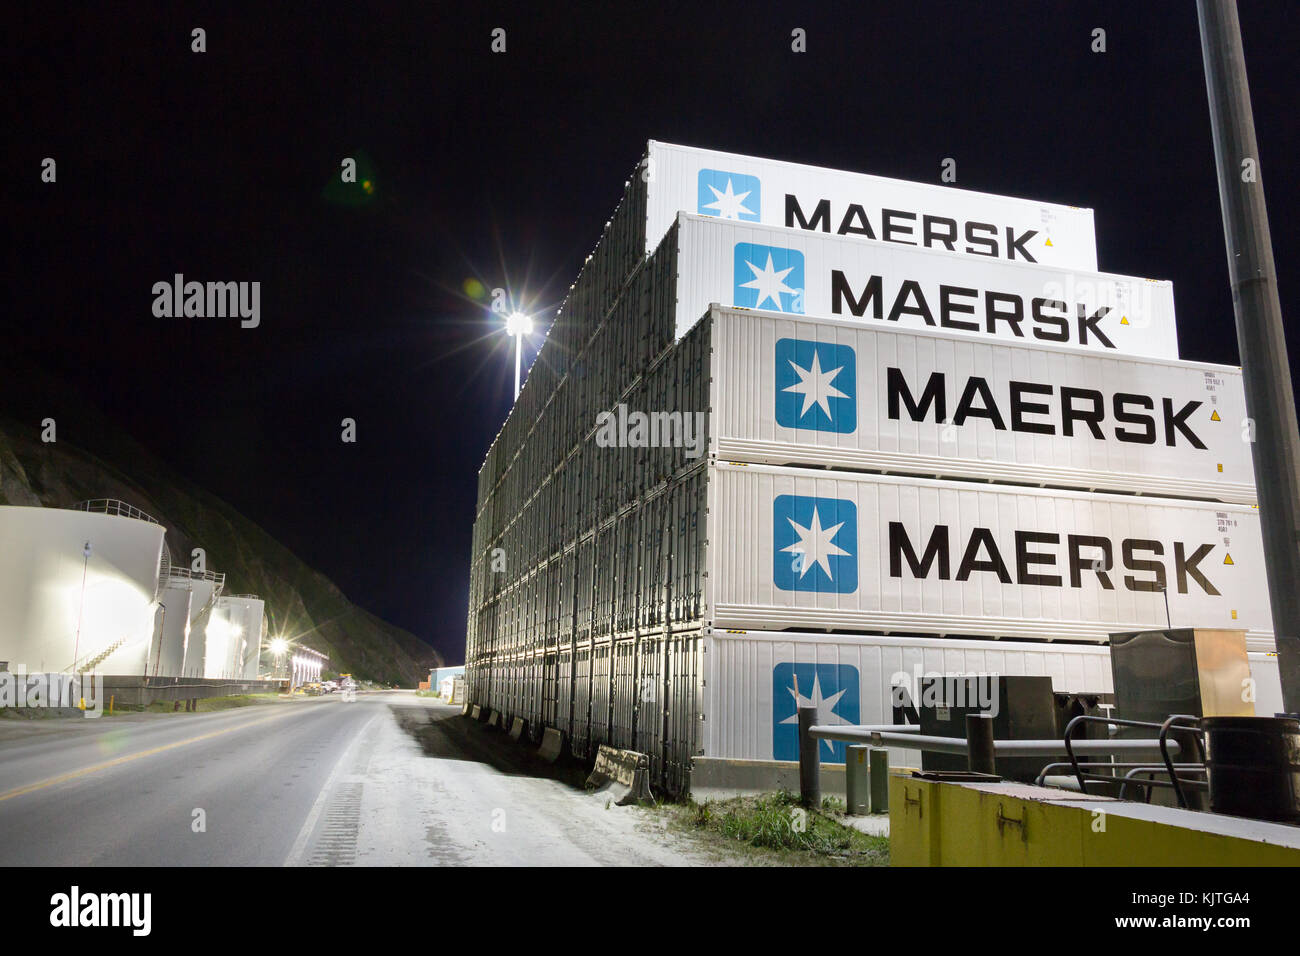 Dutch Harbor, Unalaska, Alaska, USA - 15. August 2017: pile der Transportbehälter von Maersk auf billyhoo Straße bei Nacht, Unalaska, Alaska. Stockfoto